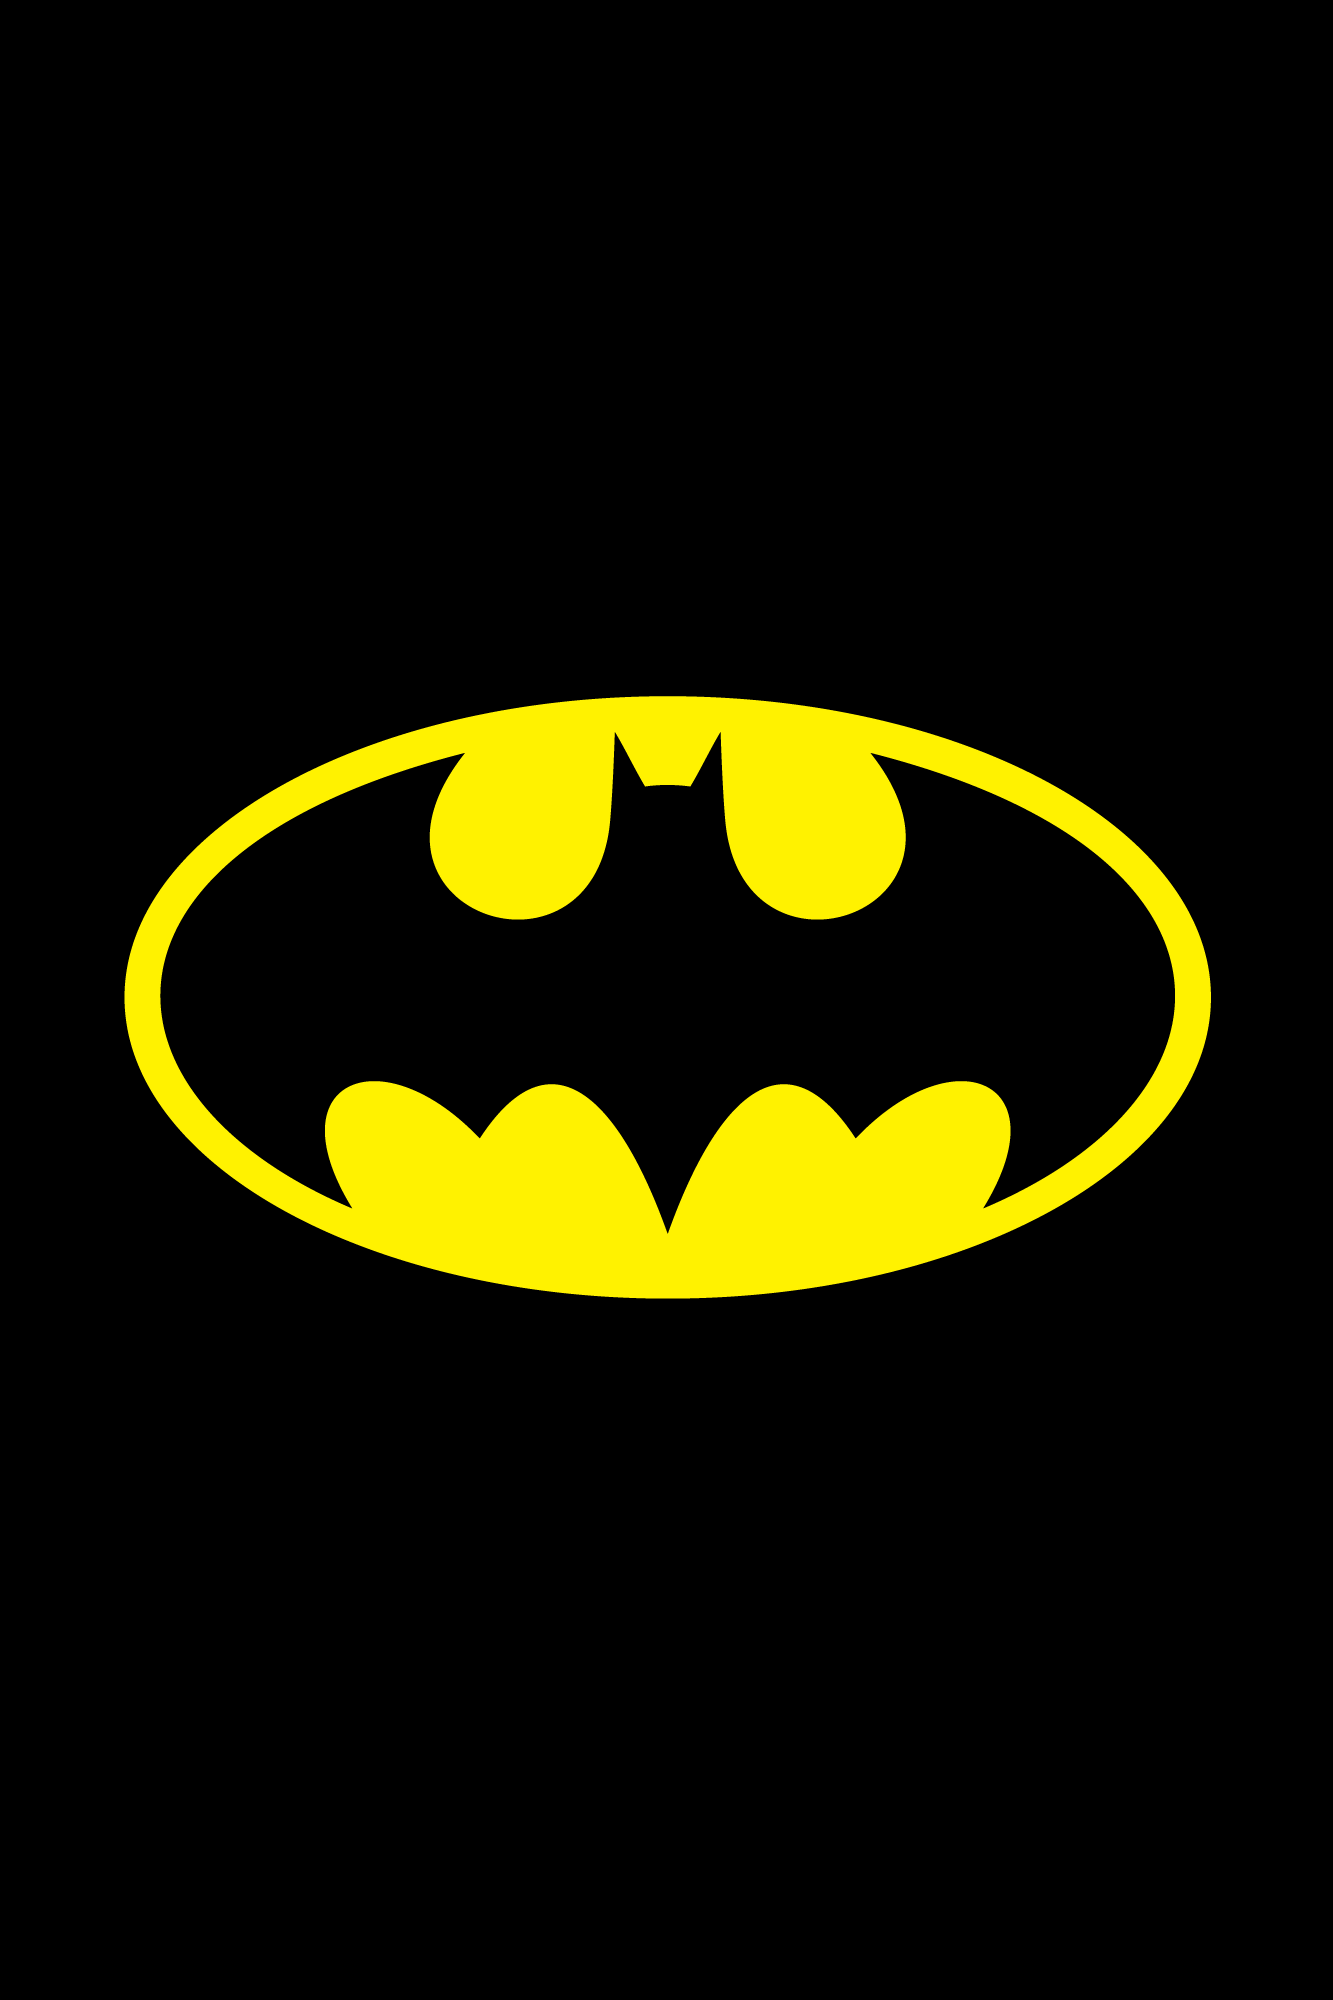 batman wallpaper celular,batman,yellow,fictional character,justice league,superhero